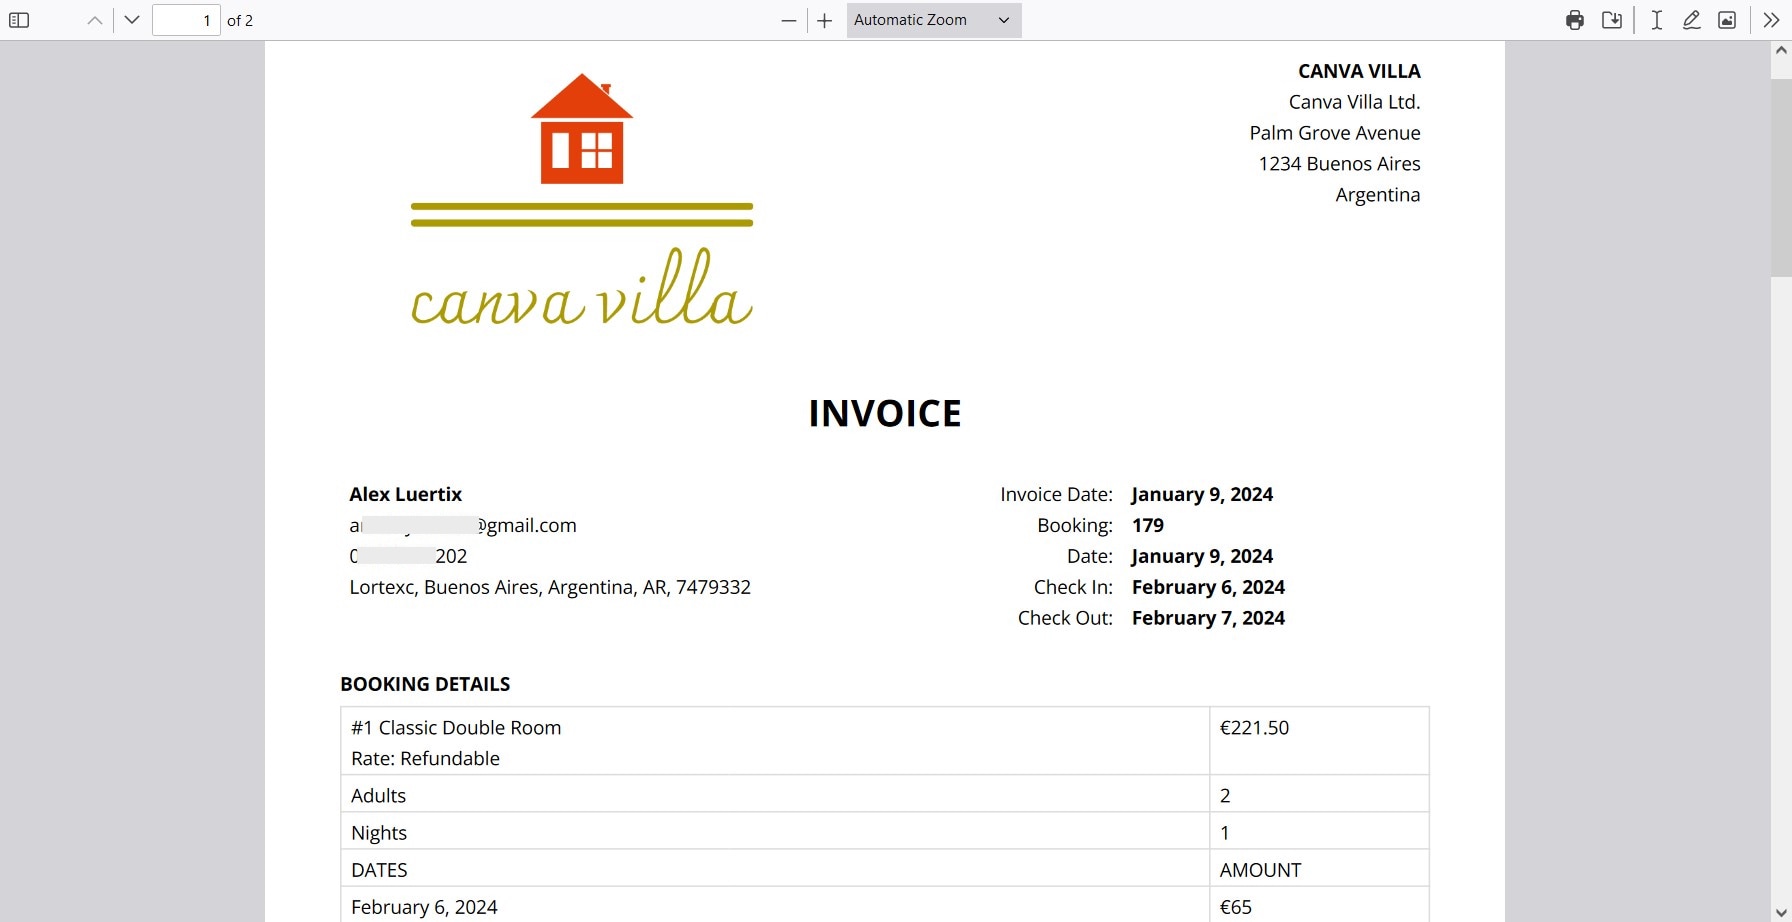 Hotel invoice format pdf.